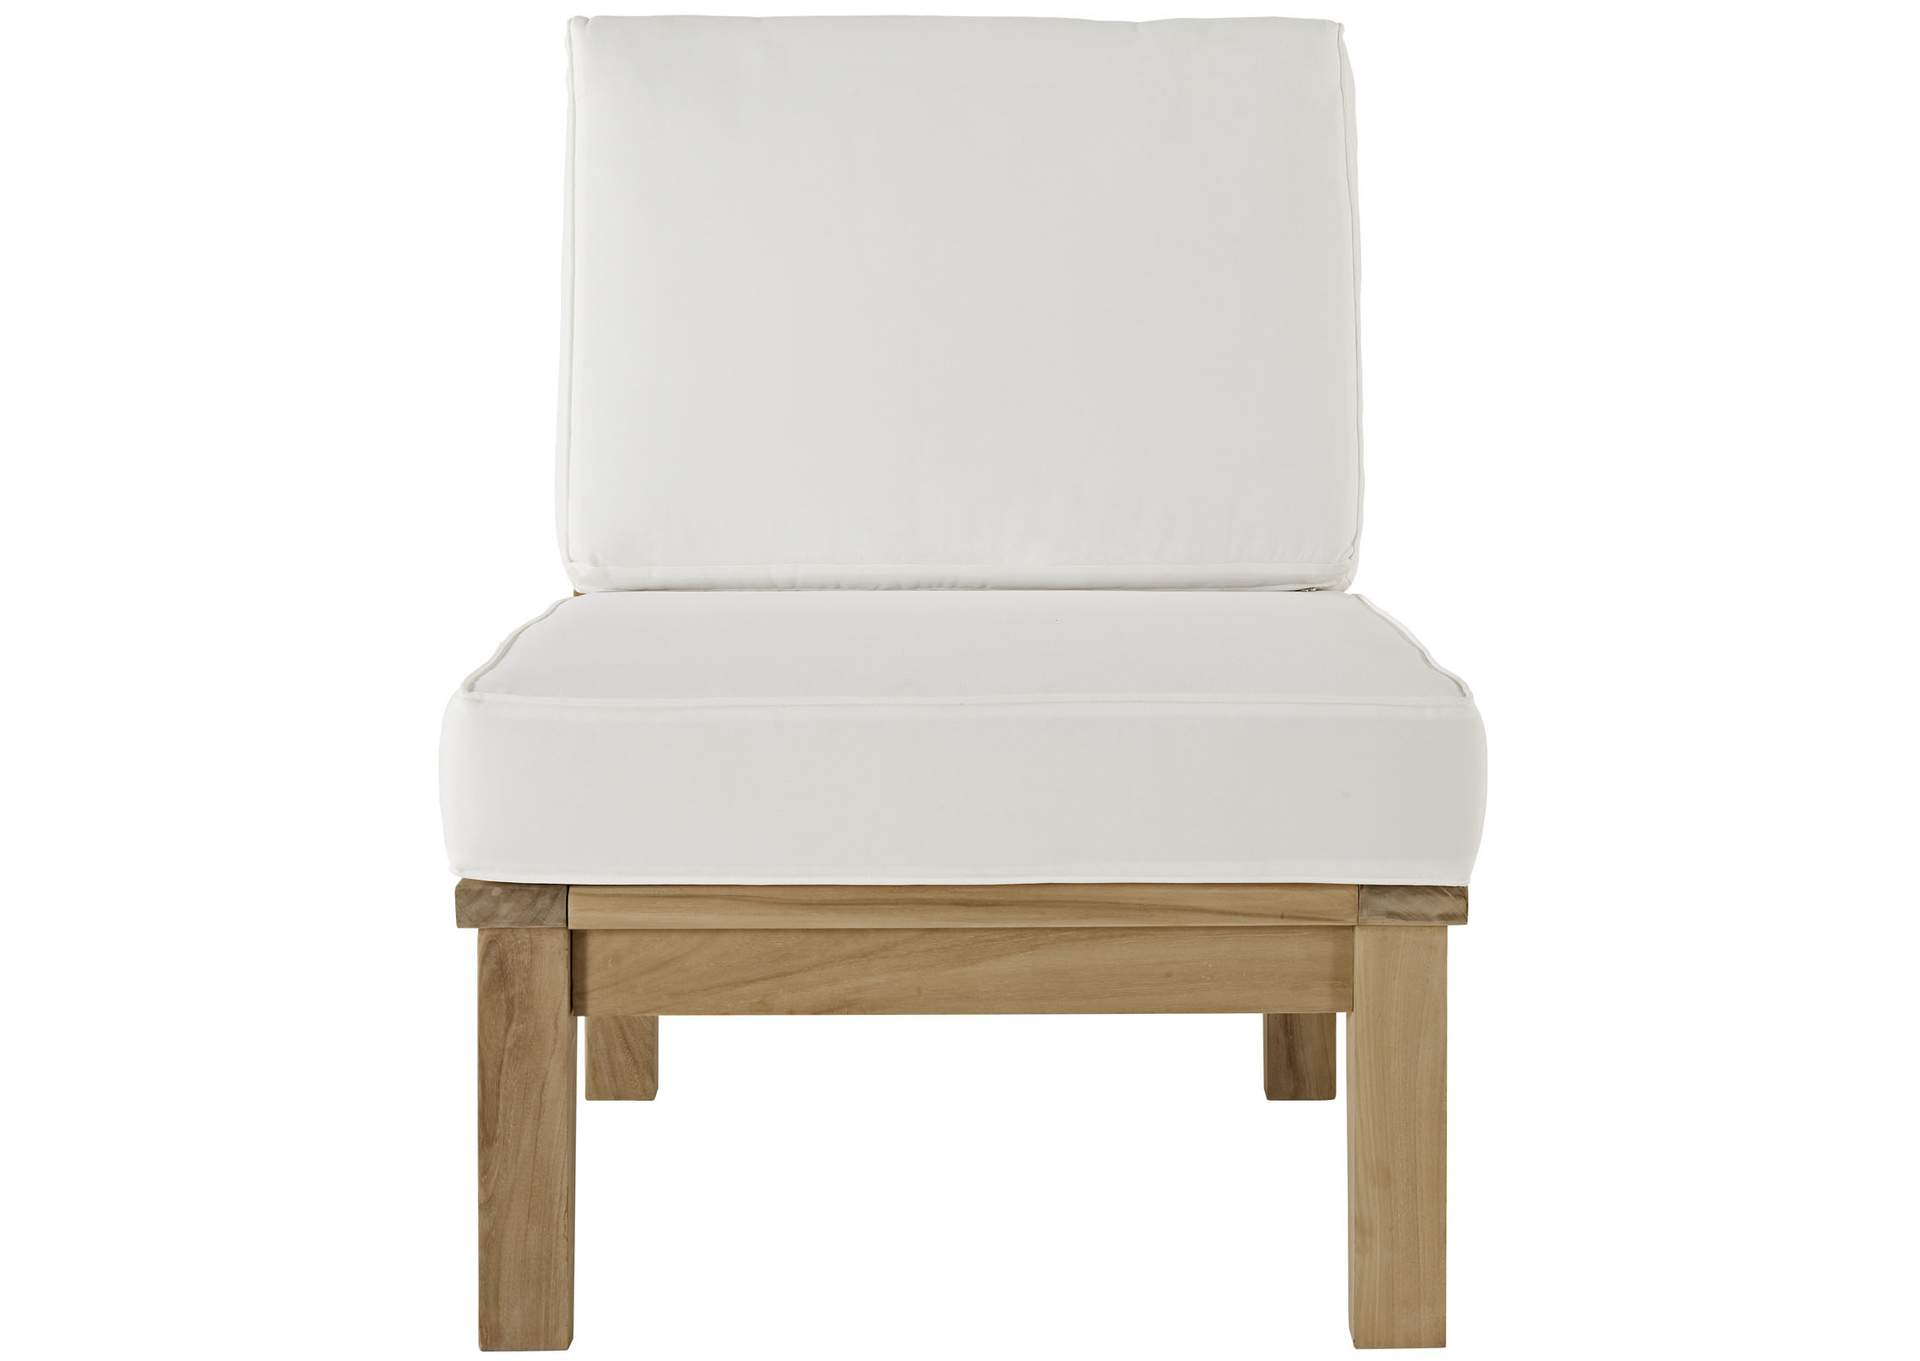 Marina Natural White Armless Outdoor Patio Teak Sofa,Modway